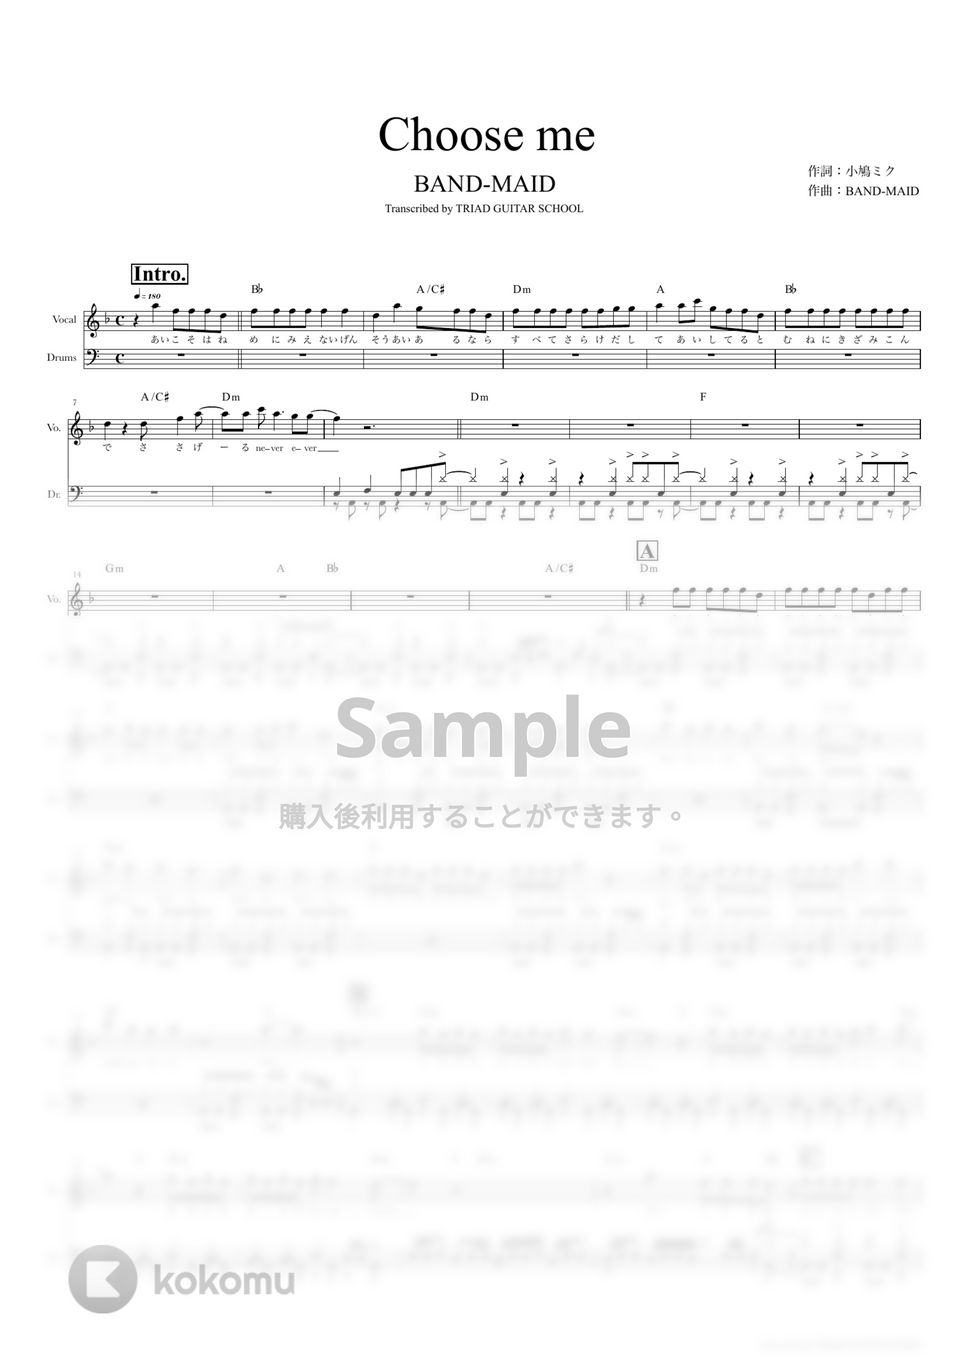 BAND-MAID - Choose me (ドラムスコア・歌詞・コード付き) by TRIAD GUITAR SCHOOL